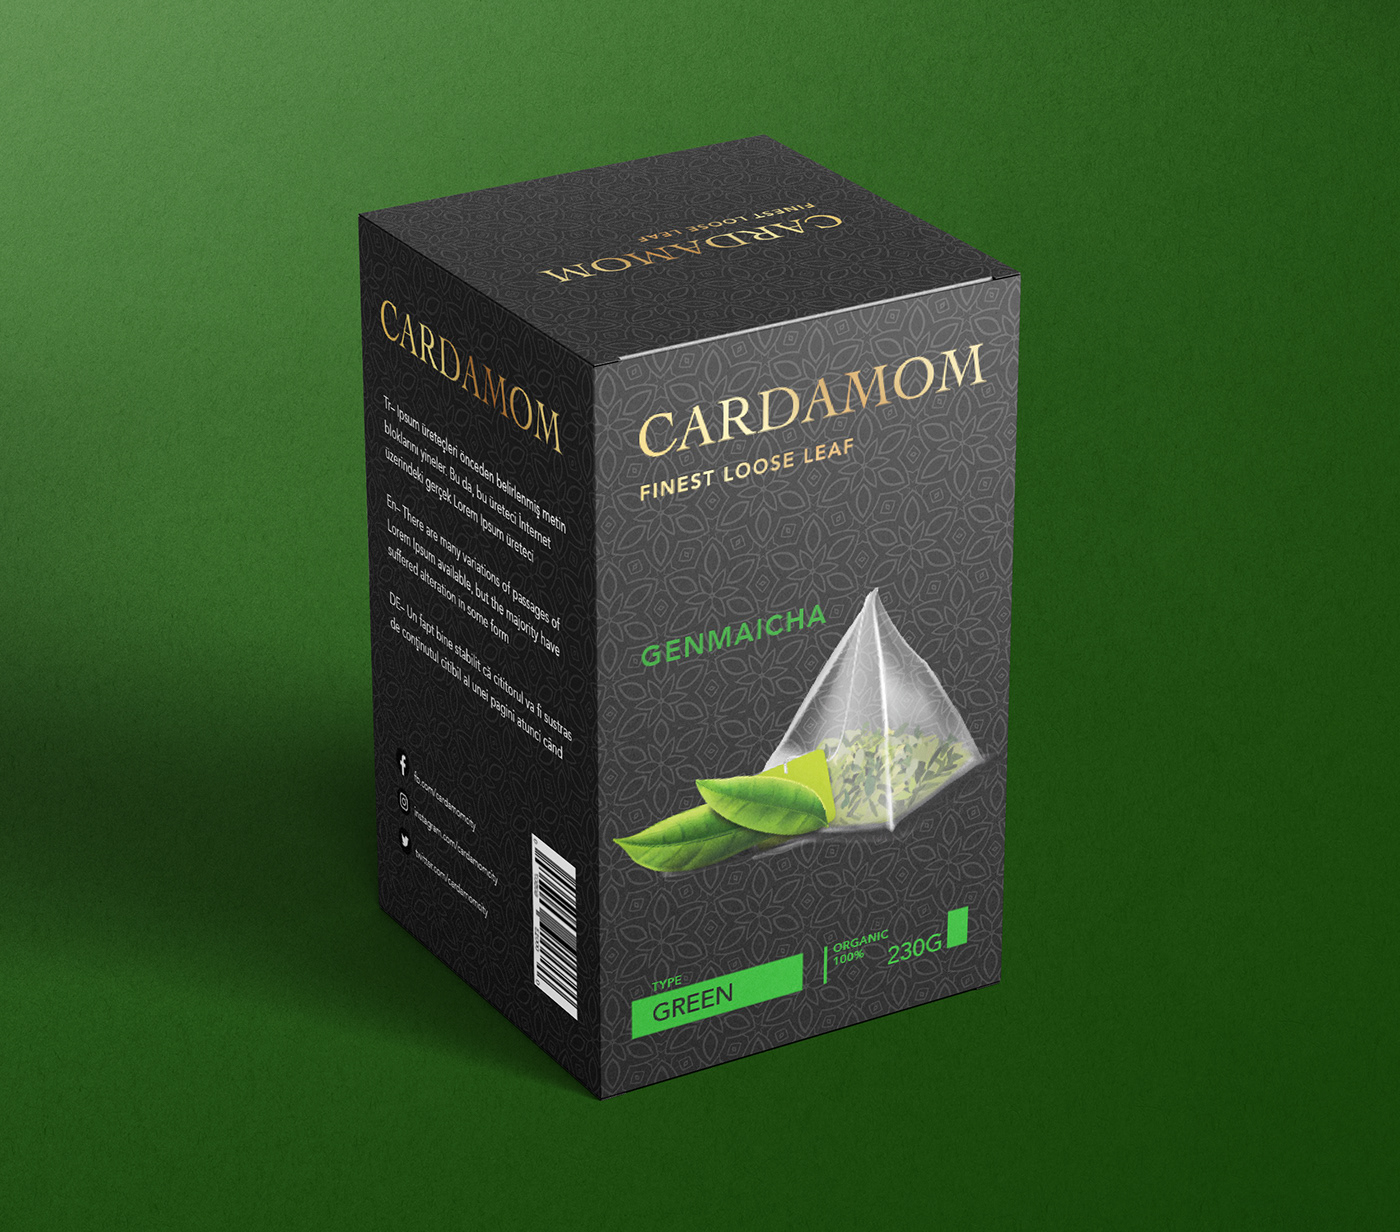 Cardamom Green Tea Packaging Design :: Behance